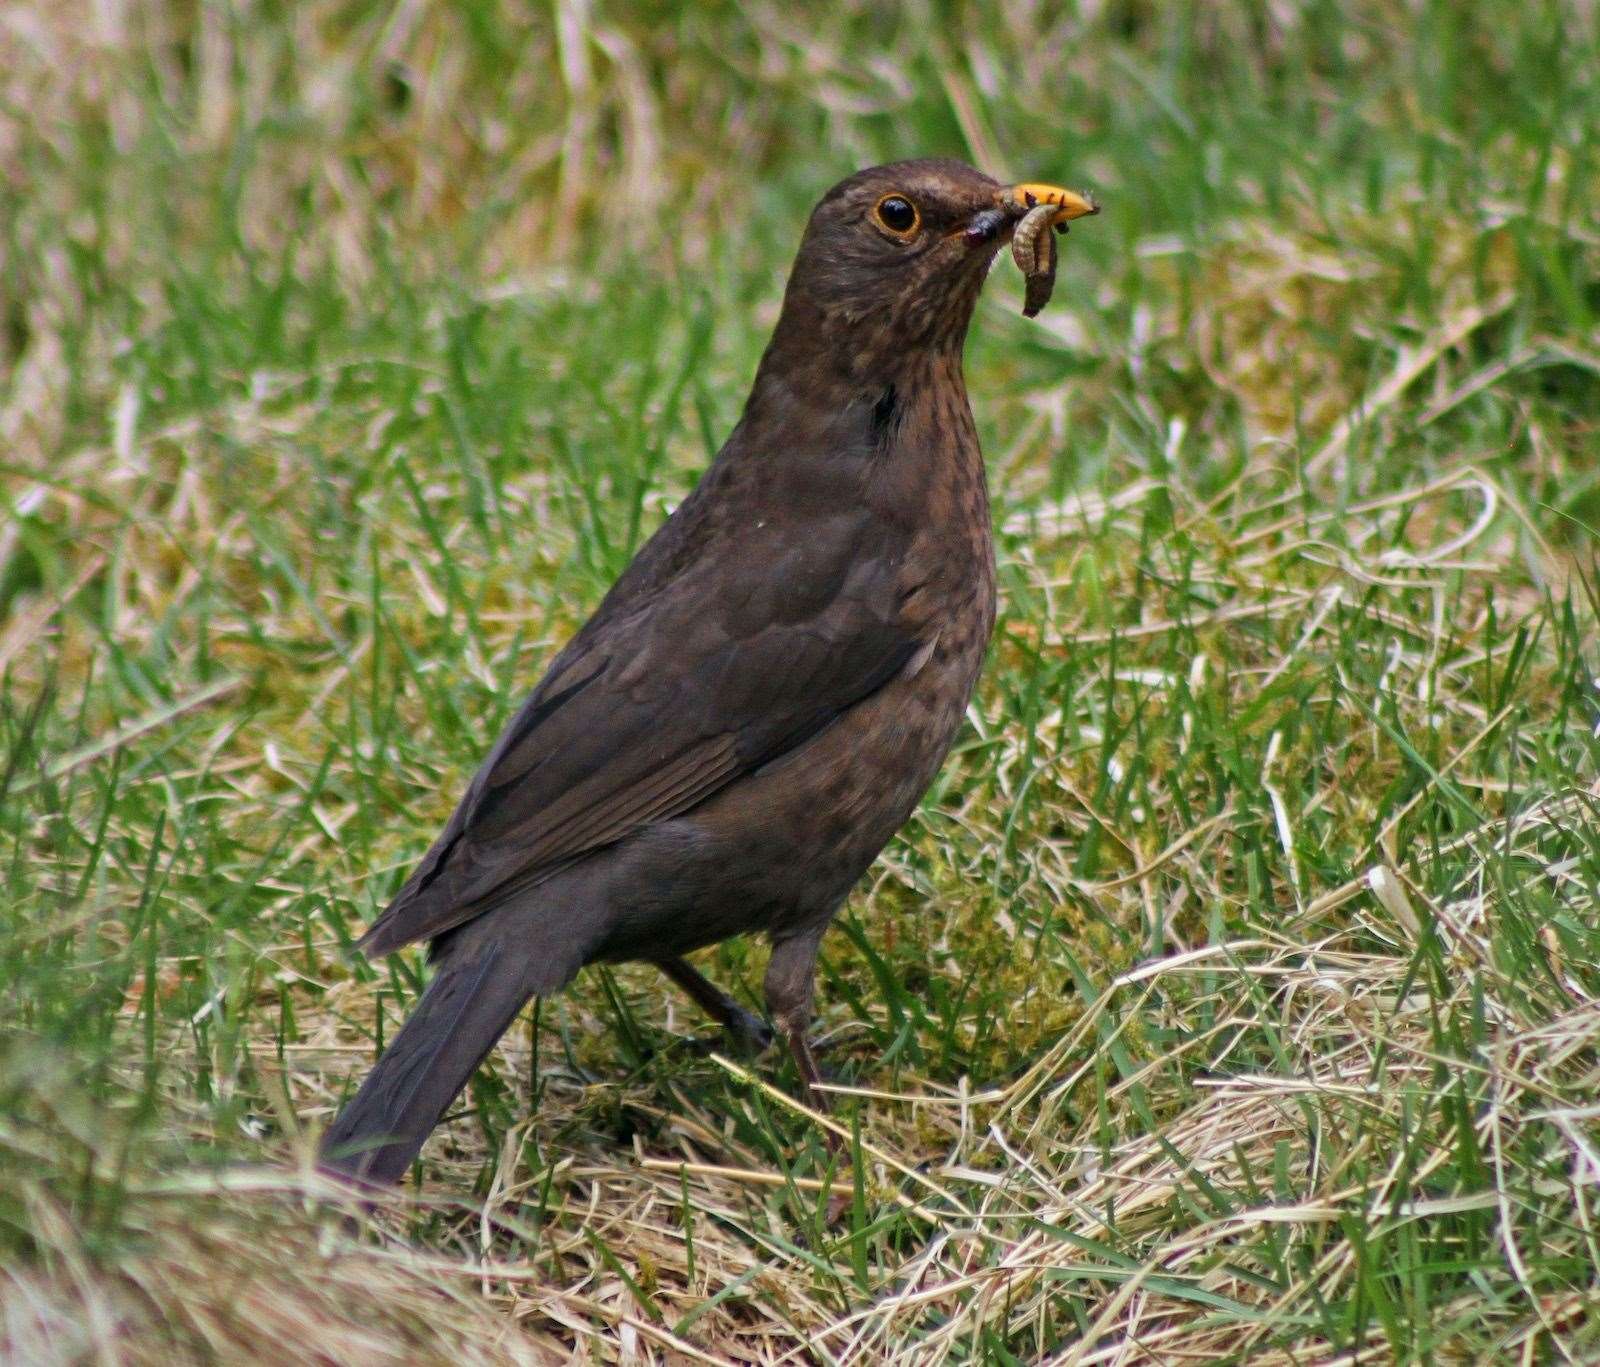 Species recorded include blackbirds. Picture: Maries Nicolai